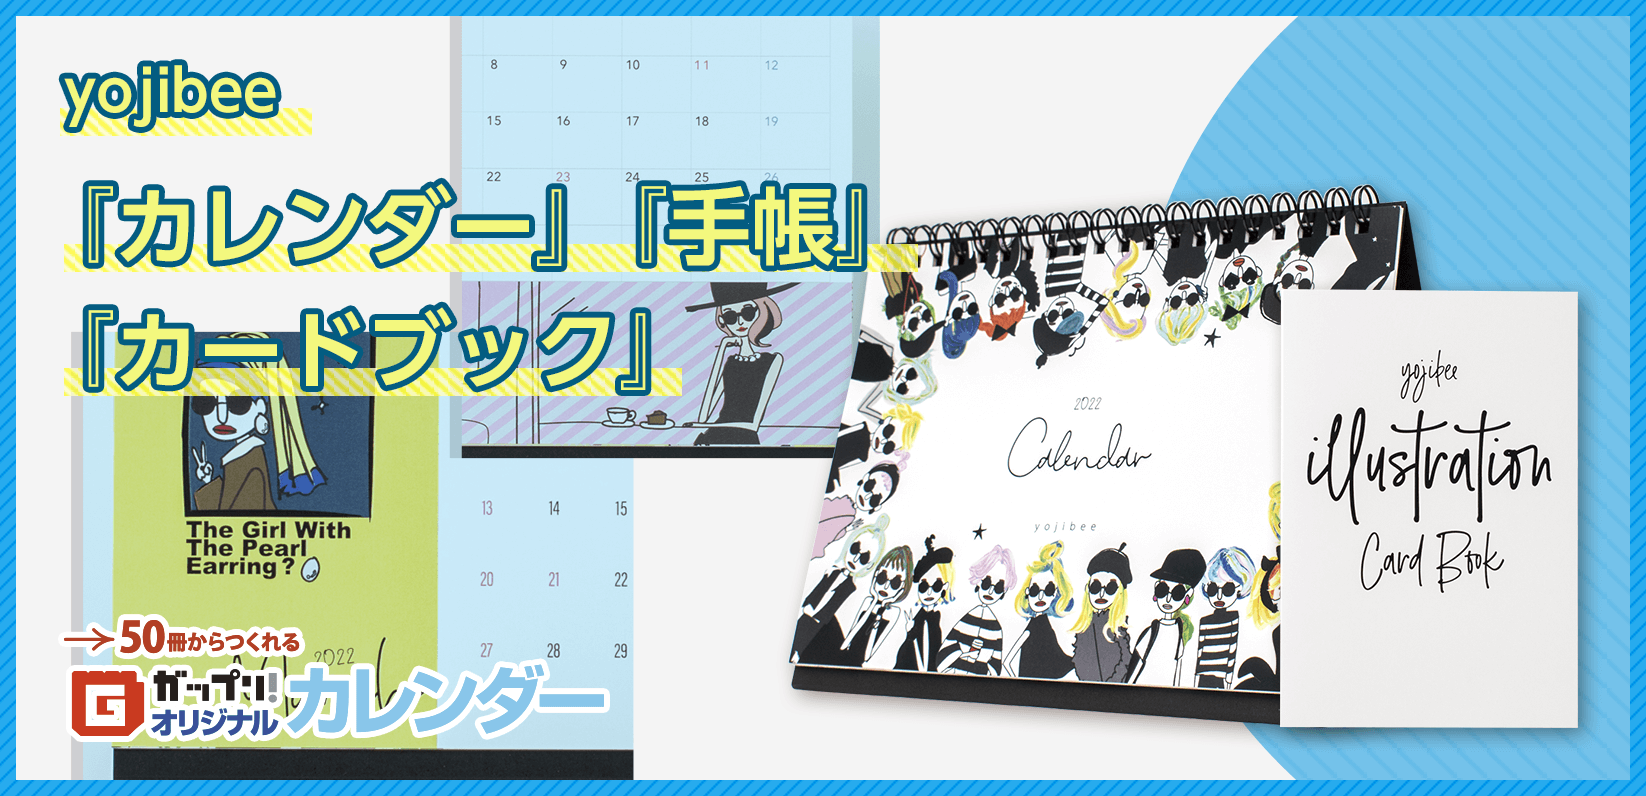 yojibee様製作の「カレンダー」「手帳」「カードブック」